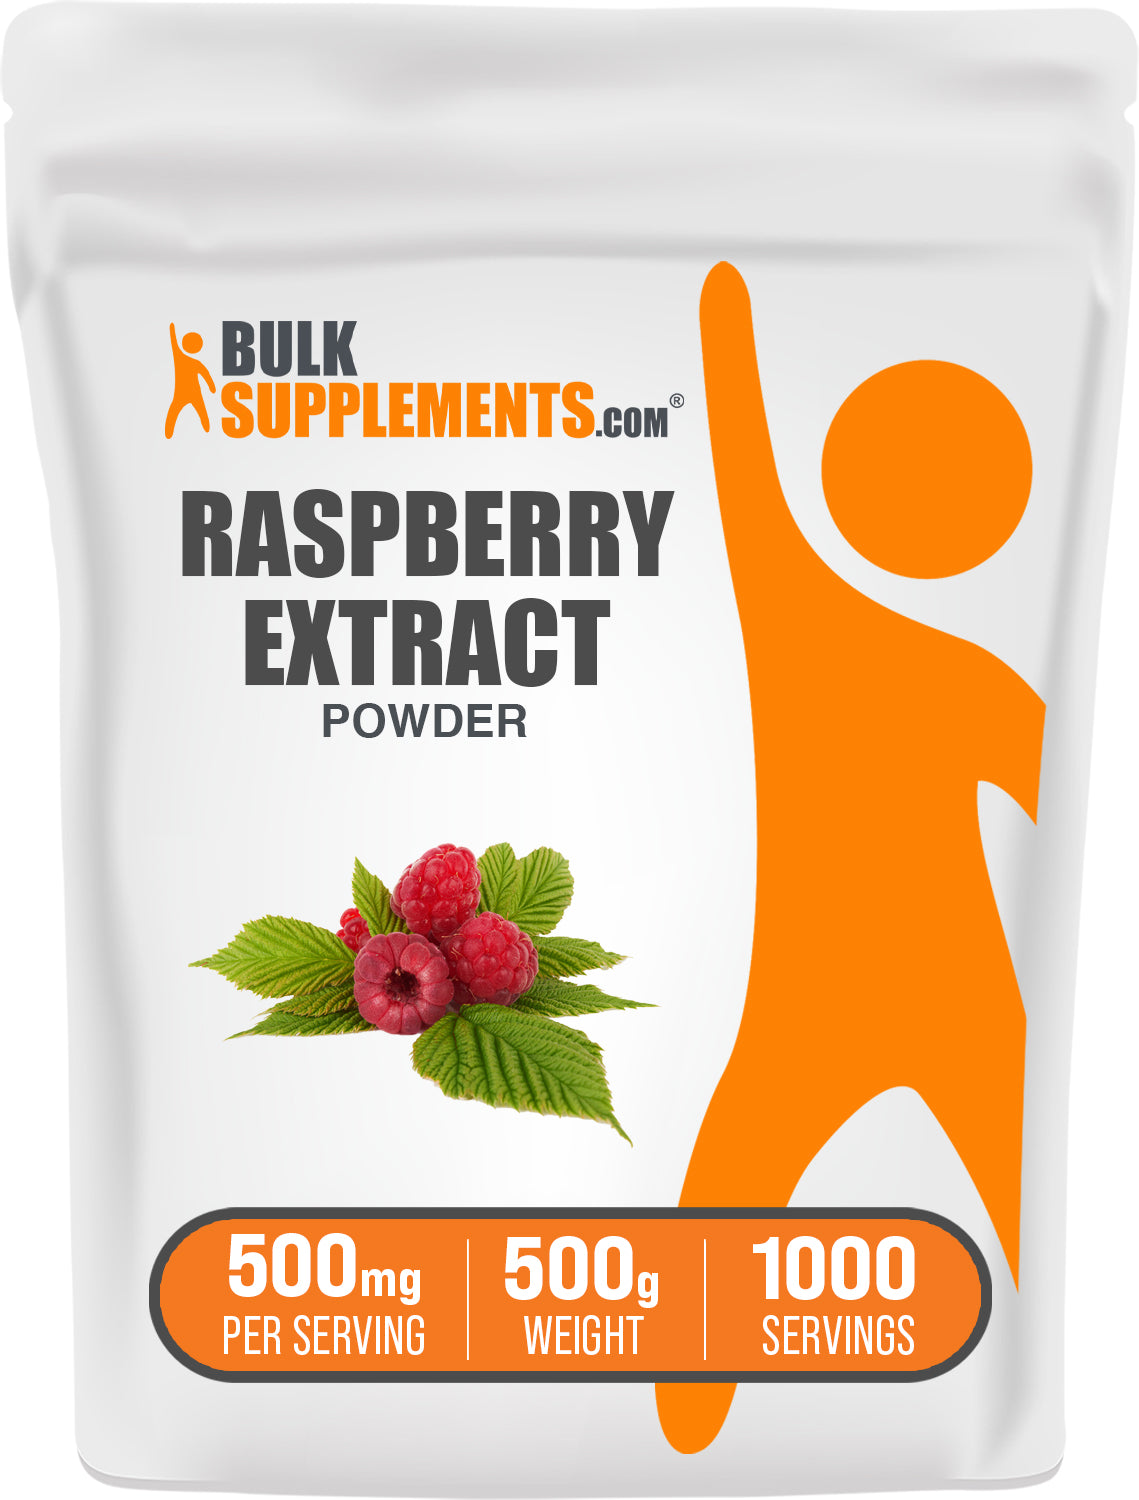 Raspberry Extract Powder 500g bag